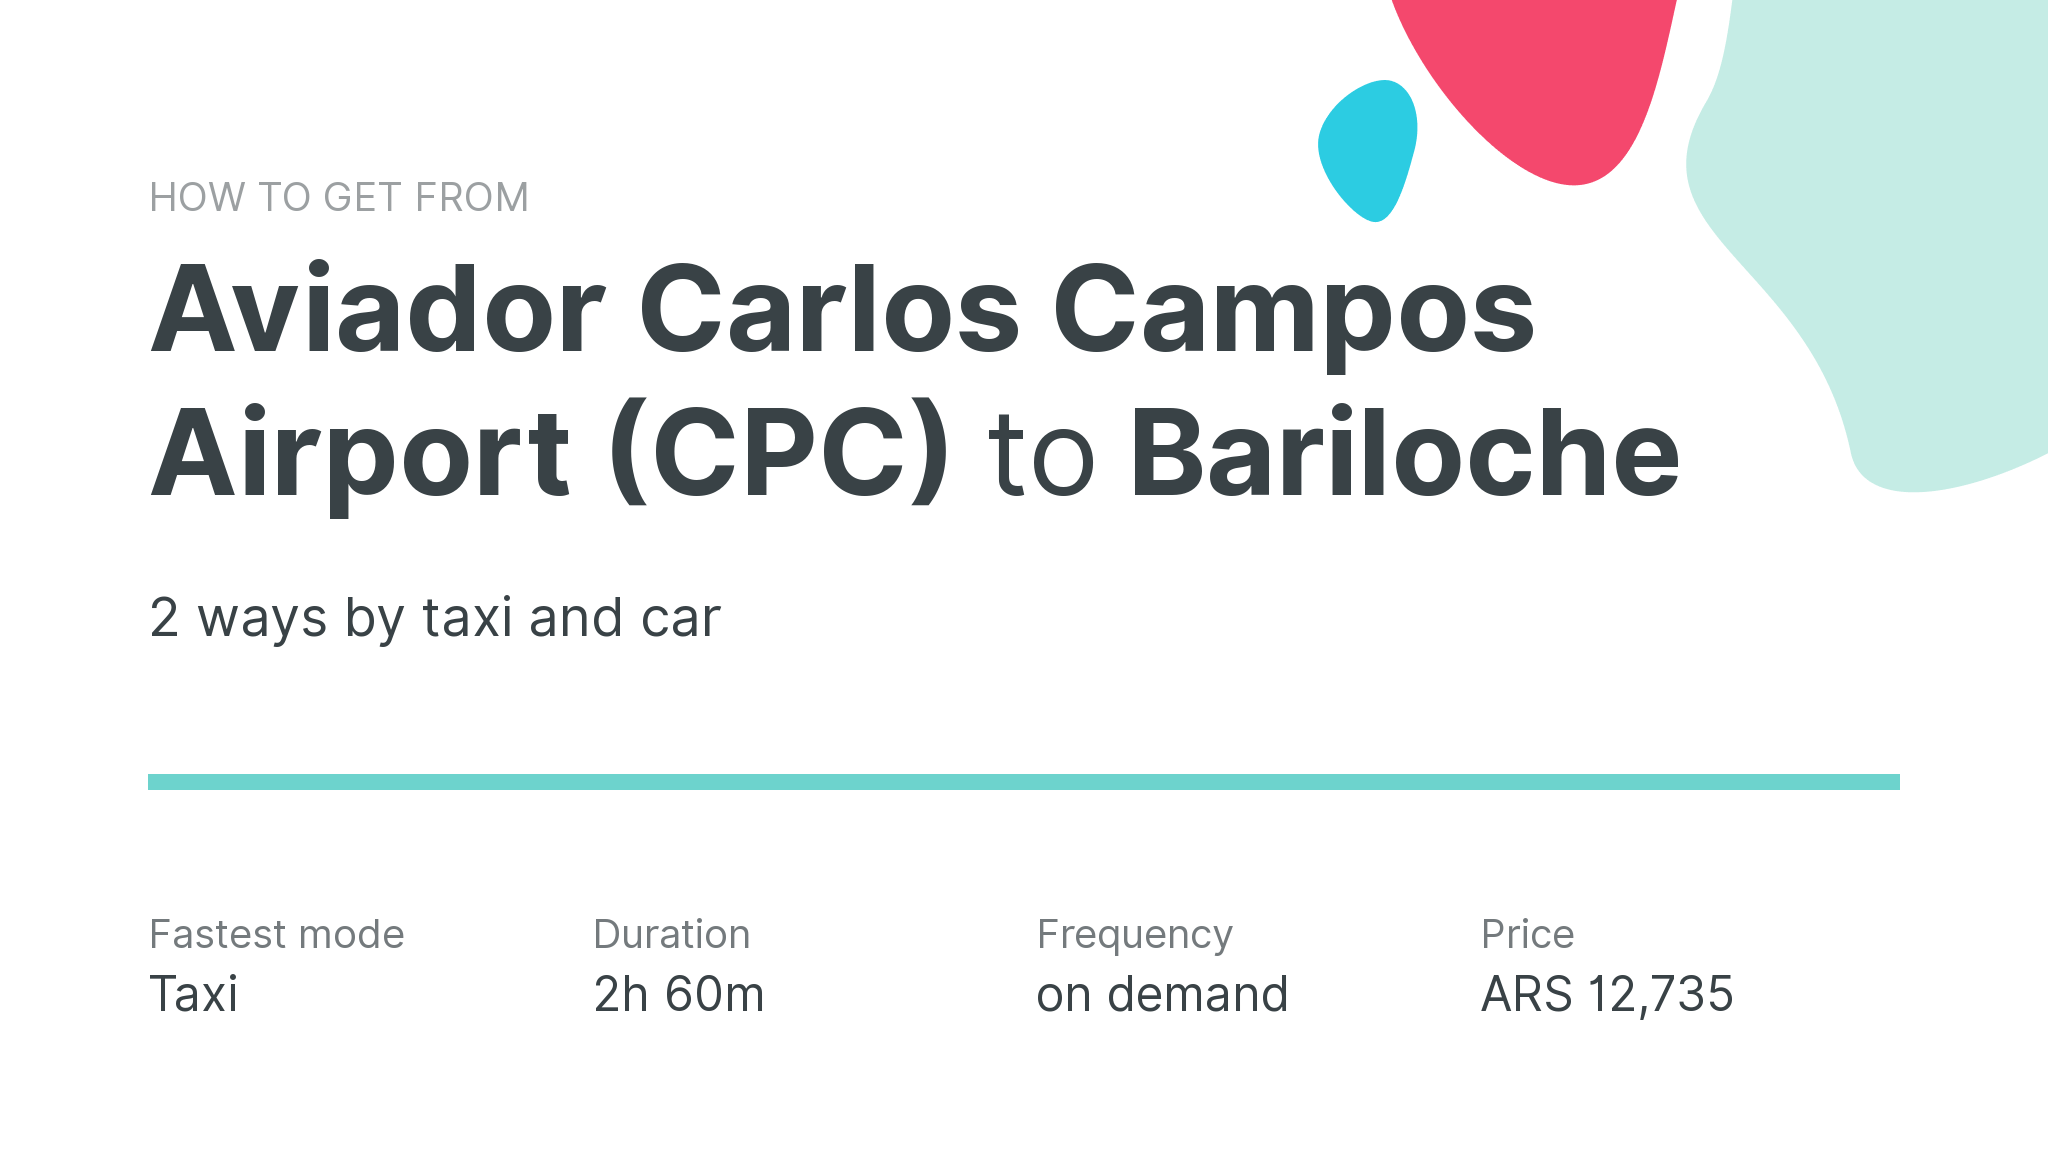 How do I get from Aviador Carlos Campos Airport (CPC) to Bariloche